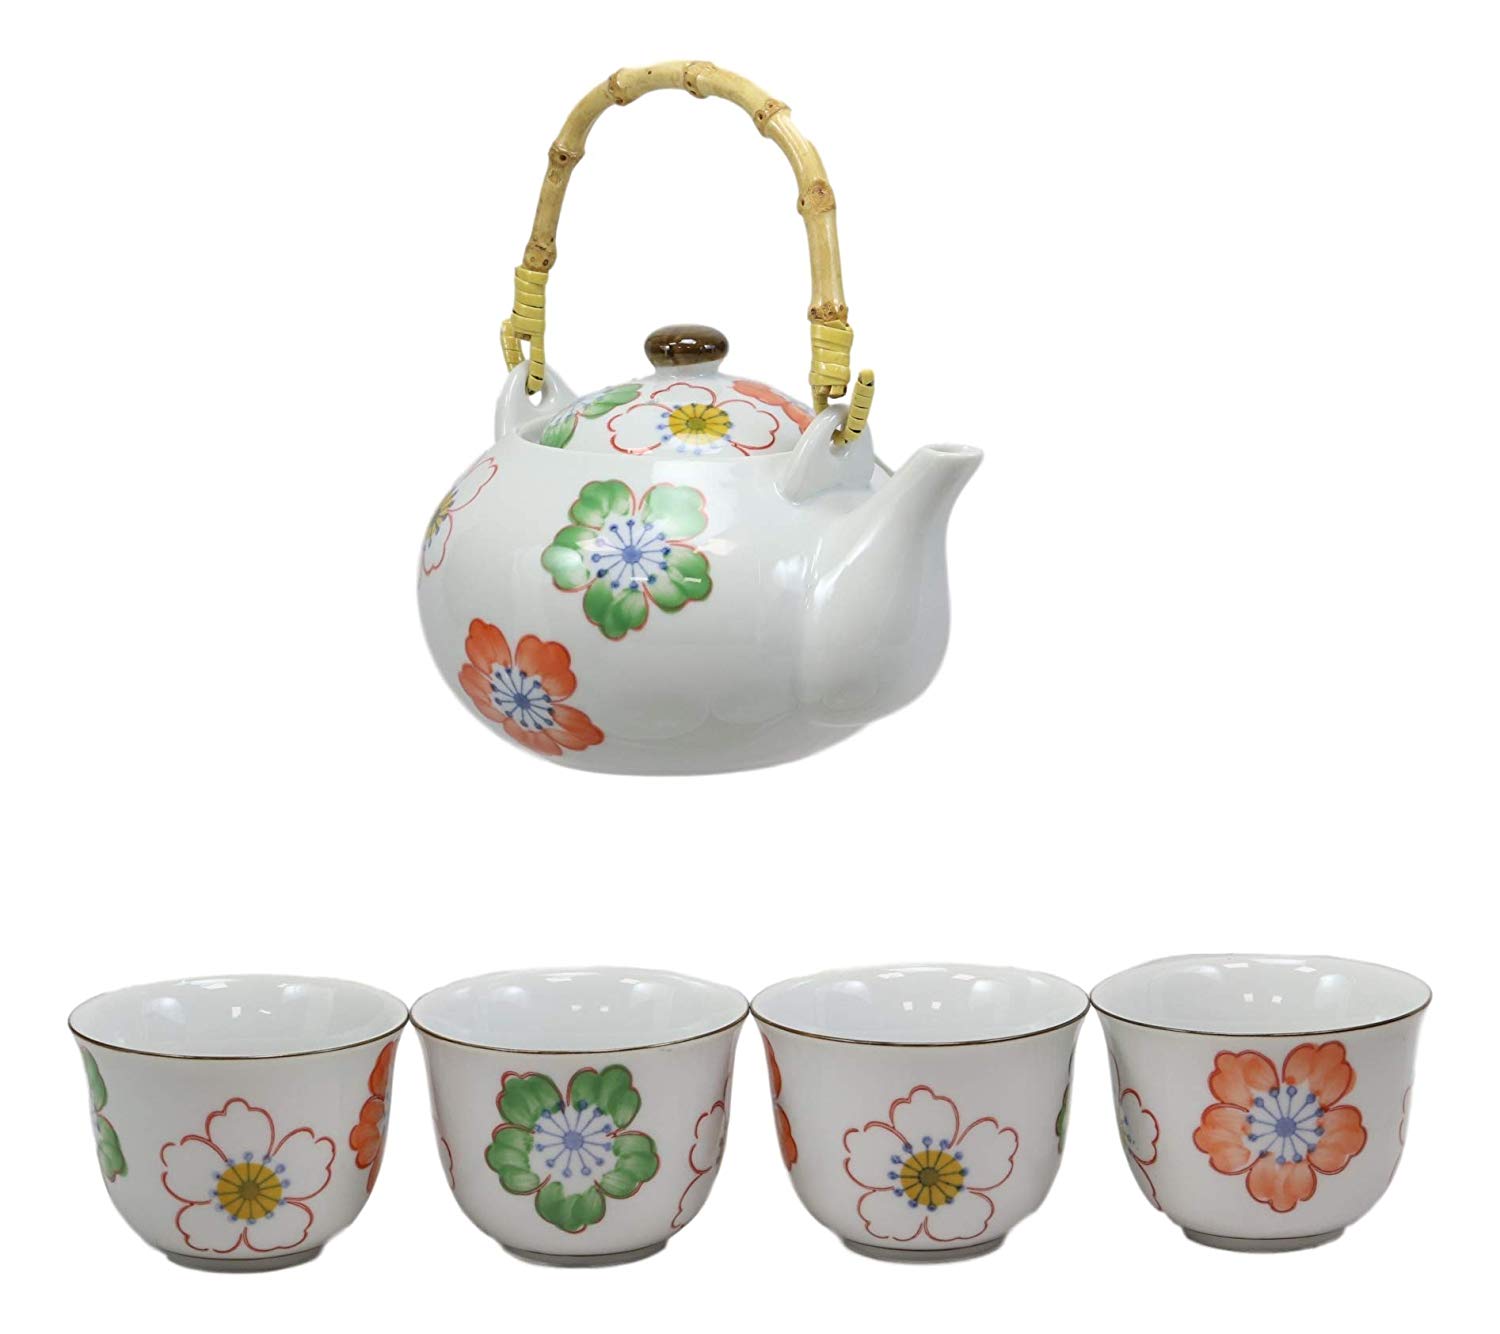 Japanese Design Colorful Botanic Floral Porcelain White Tea Pot And Cups Set - image 3 of 8